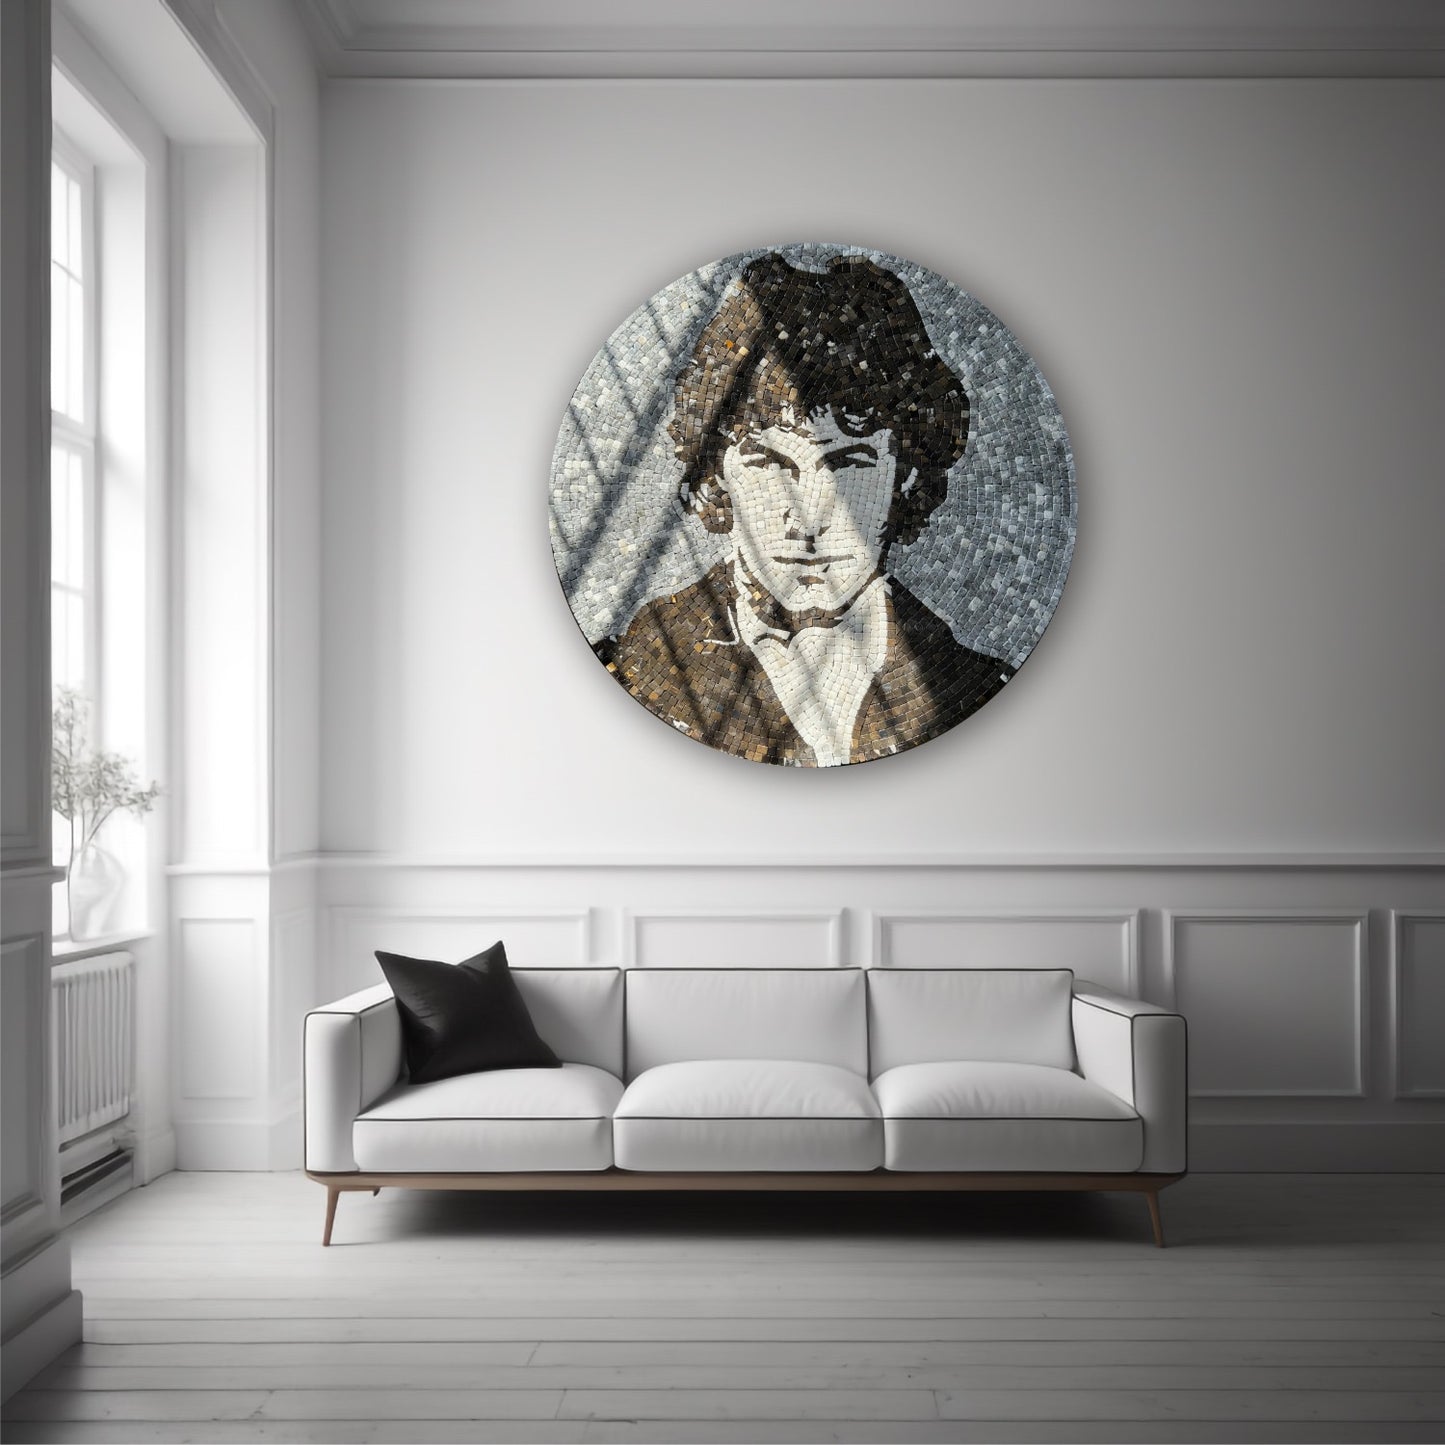 Customized Portrait Mosaic